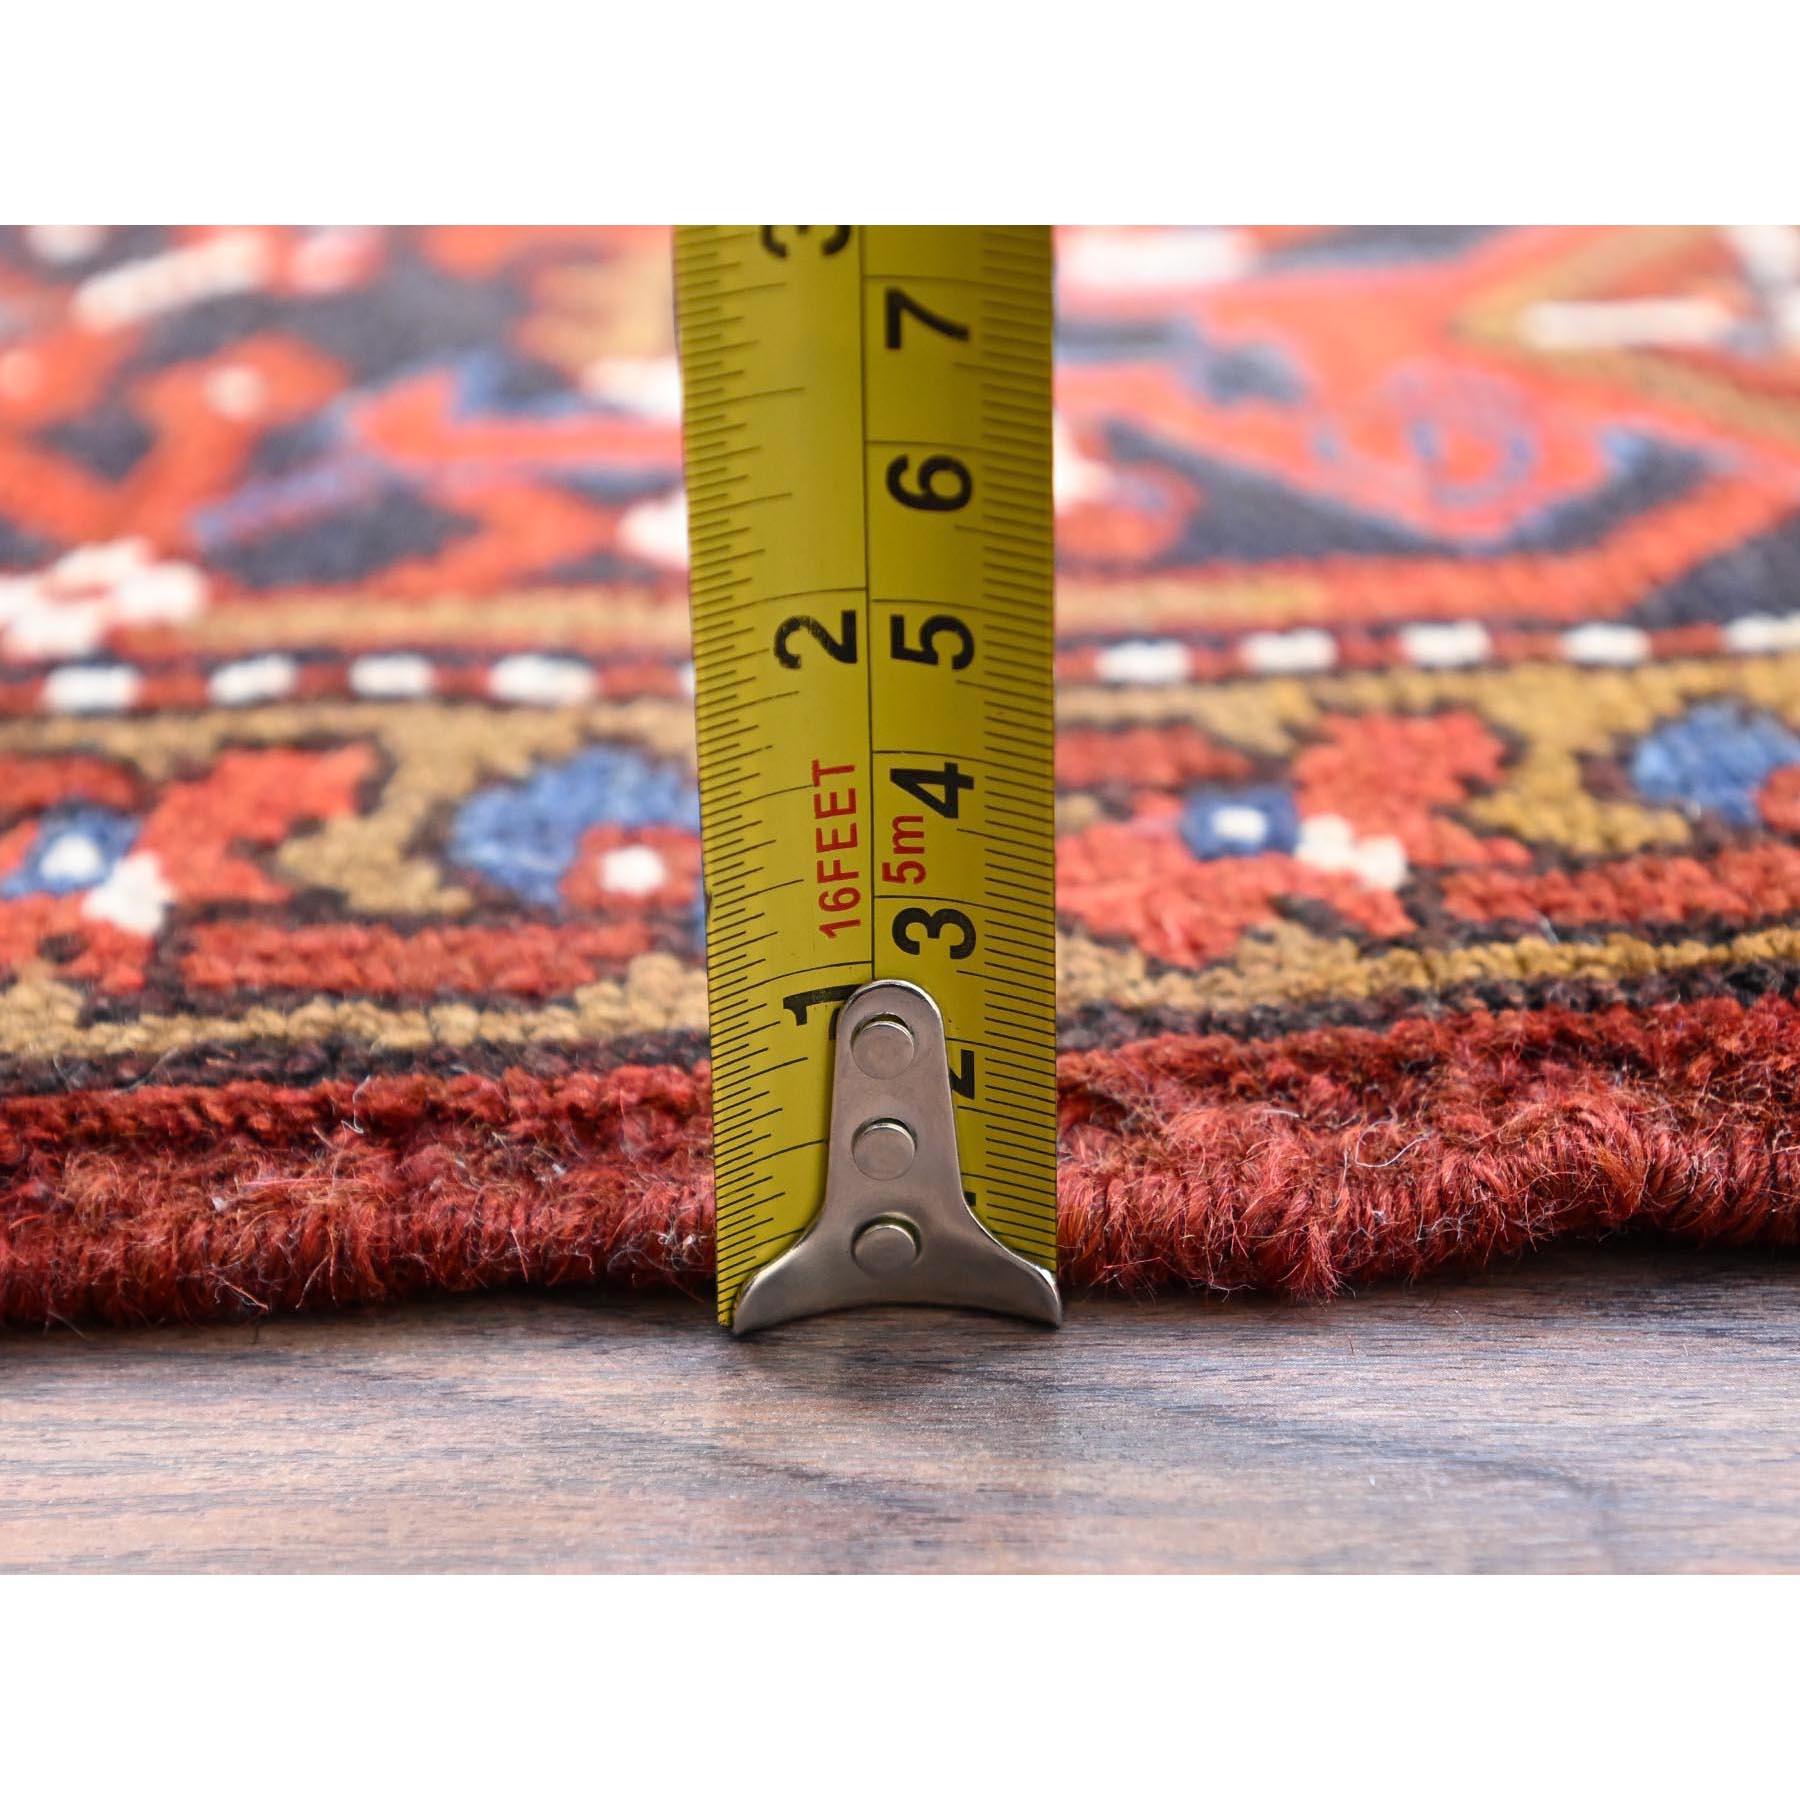 Red Worn Wool Hand Knotted Vintage Persian Heriz Tribal Ambience Rug 9'10